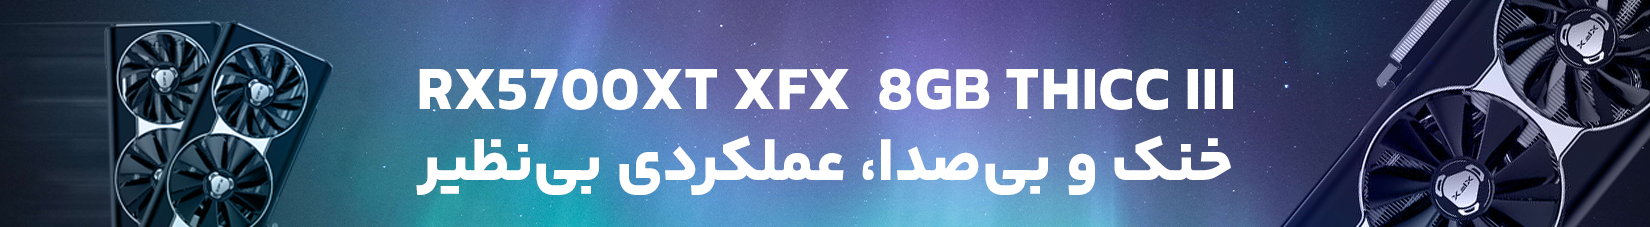 کارت گرافیک استوک ایکس اف ایکس RX5700XT Xfx 8gb thicc III